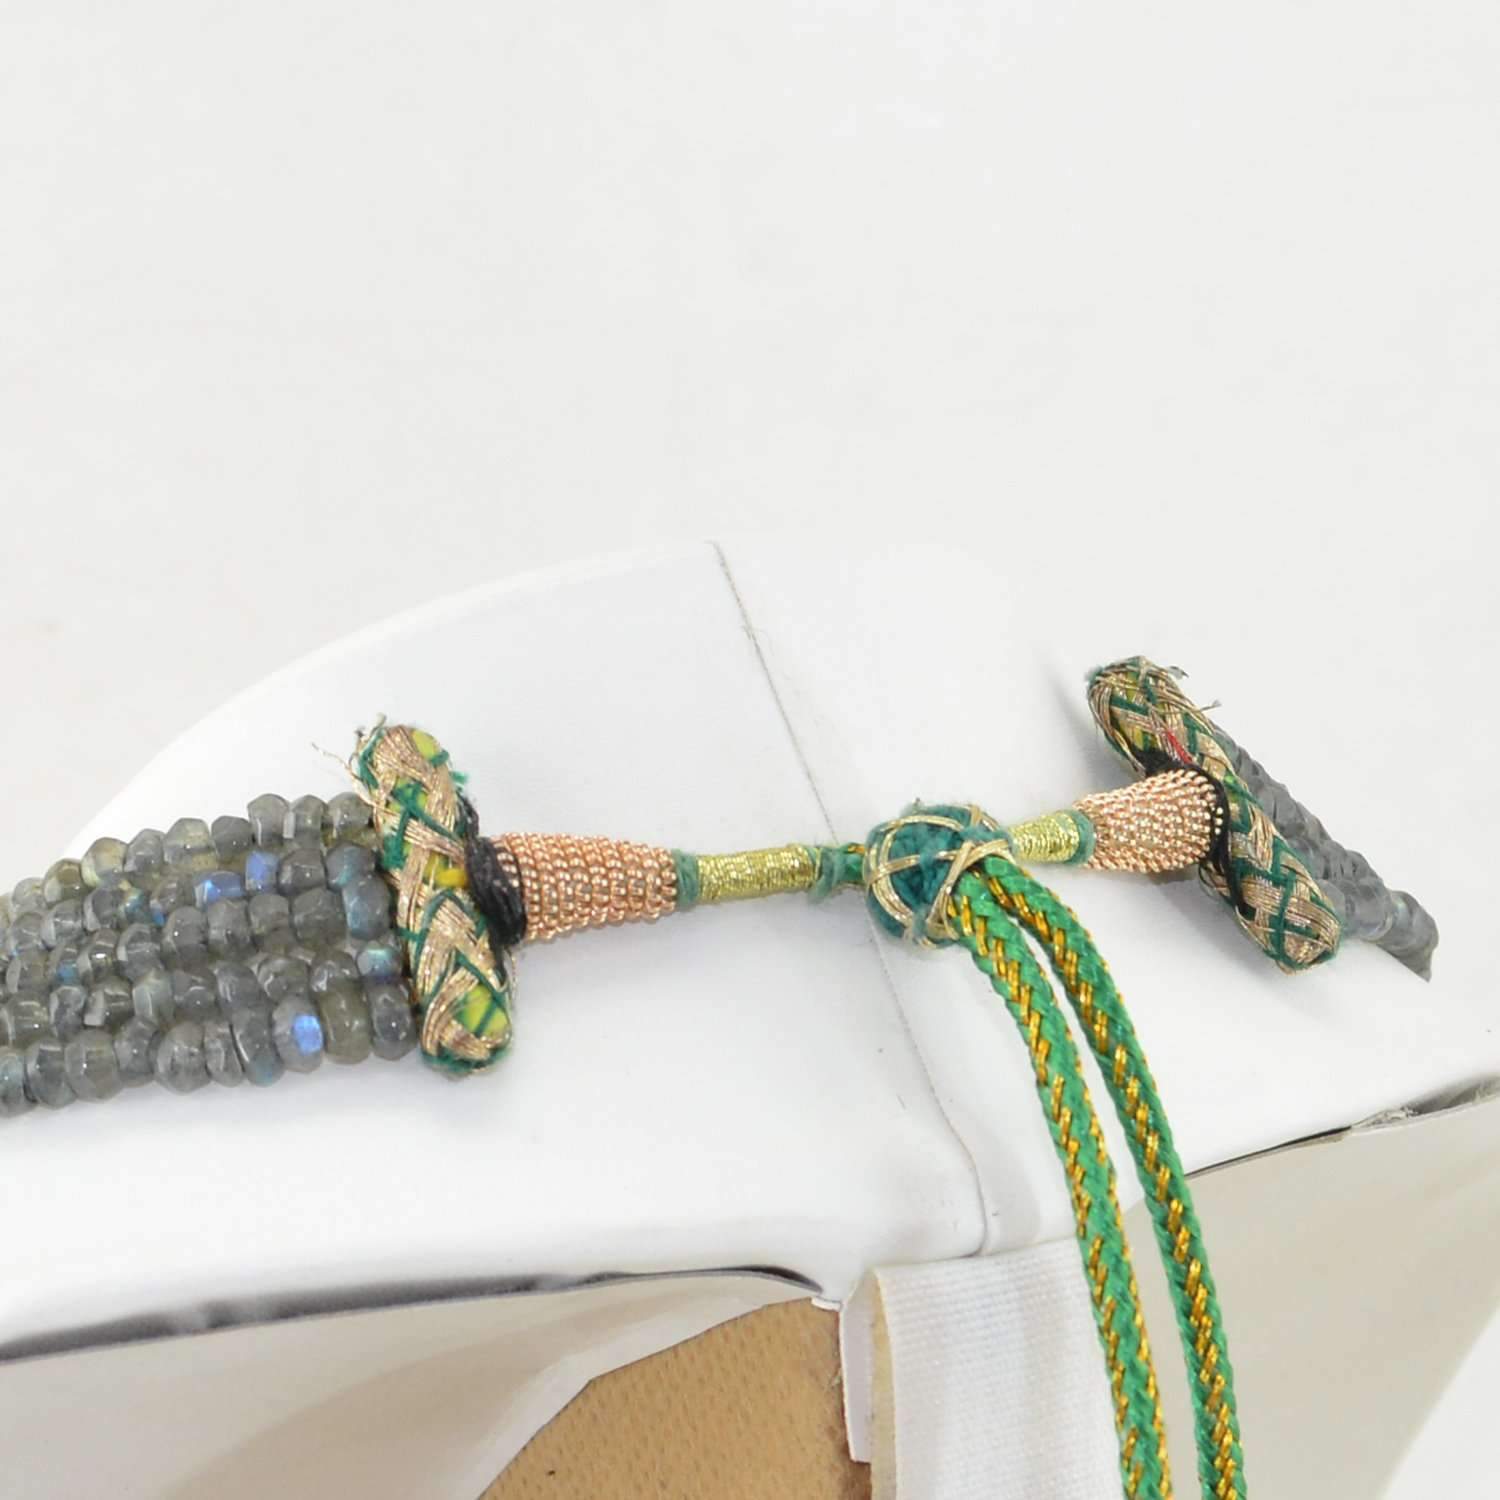 gemsmore:Blue & Golden Flash Labradorite Necklace Faceted Beads - Natural 5 Line Round Shape